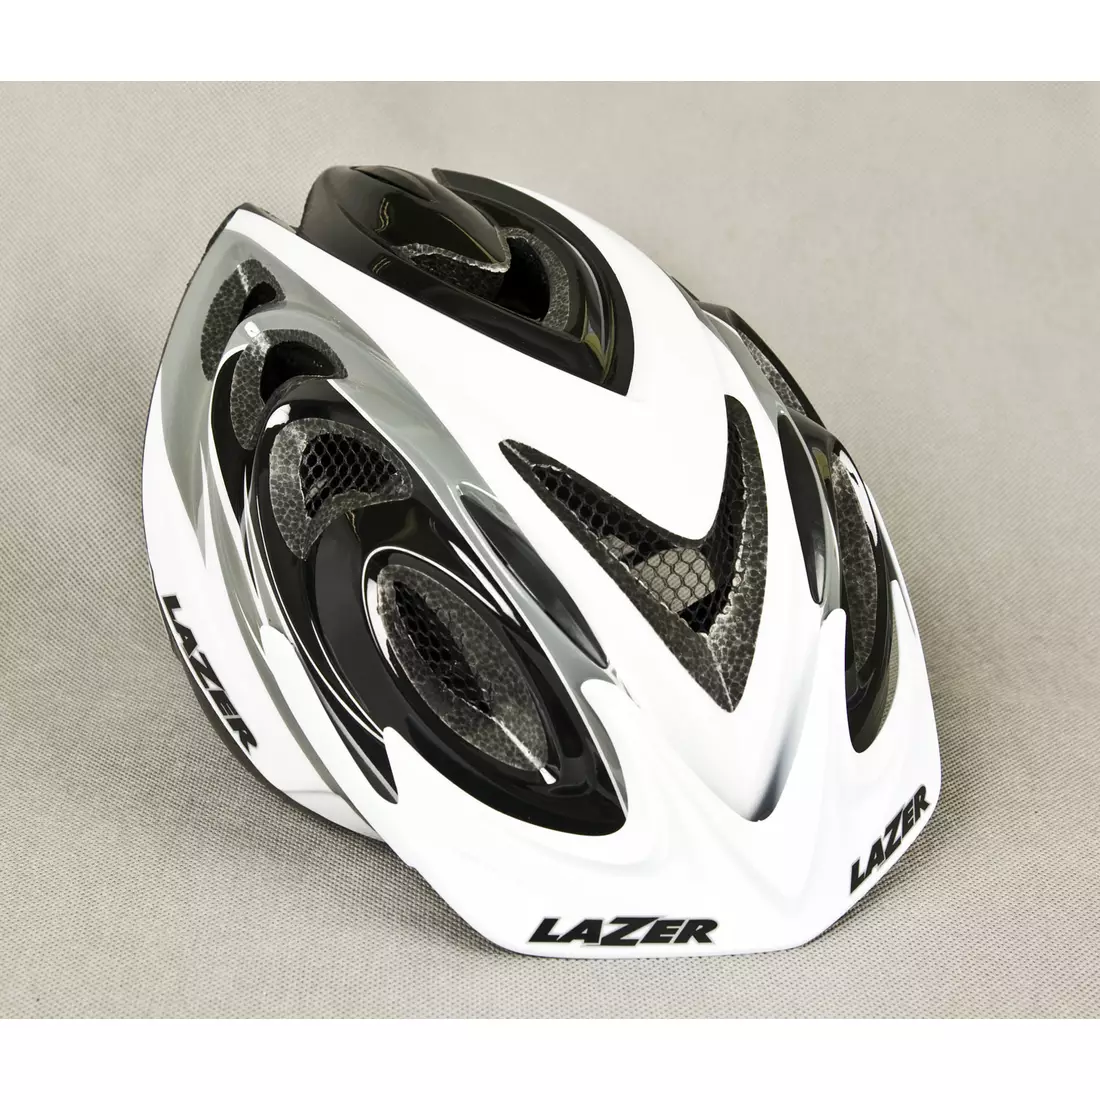 LAZER - 2X3M MTB bicycle helmet, color: gray white black